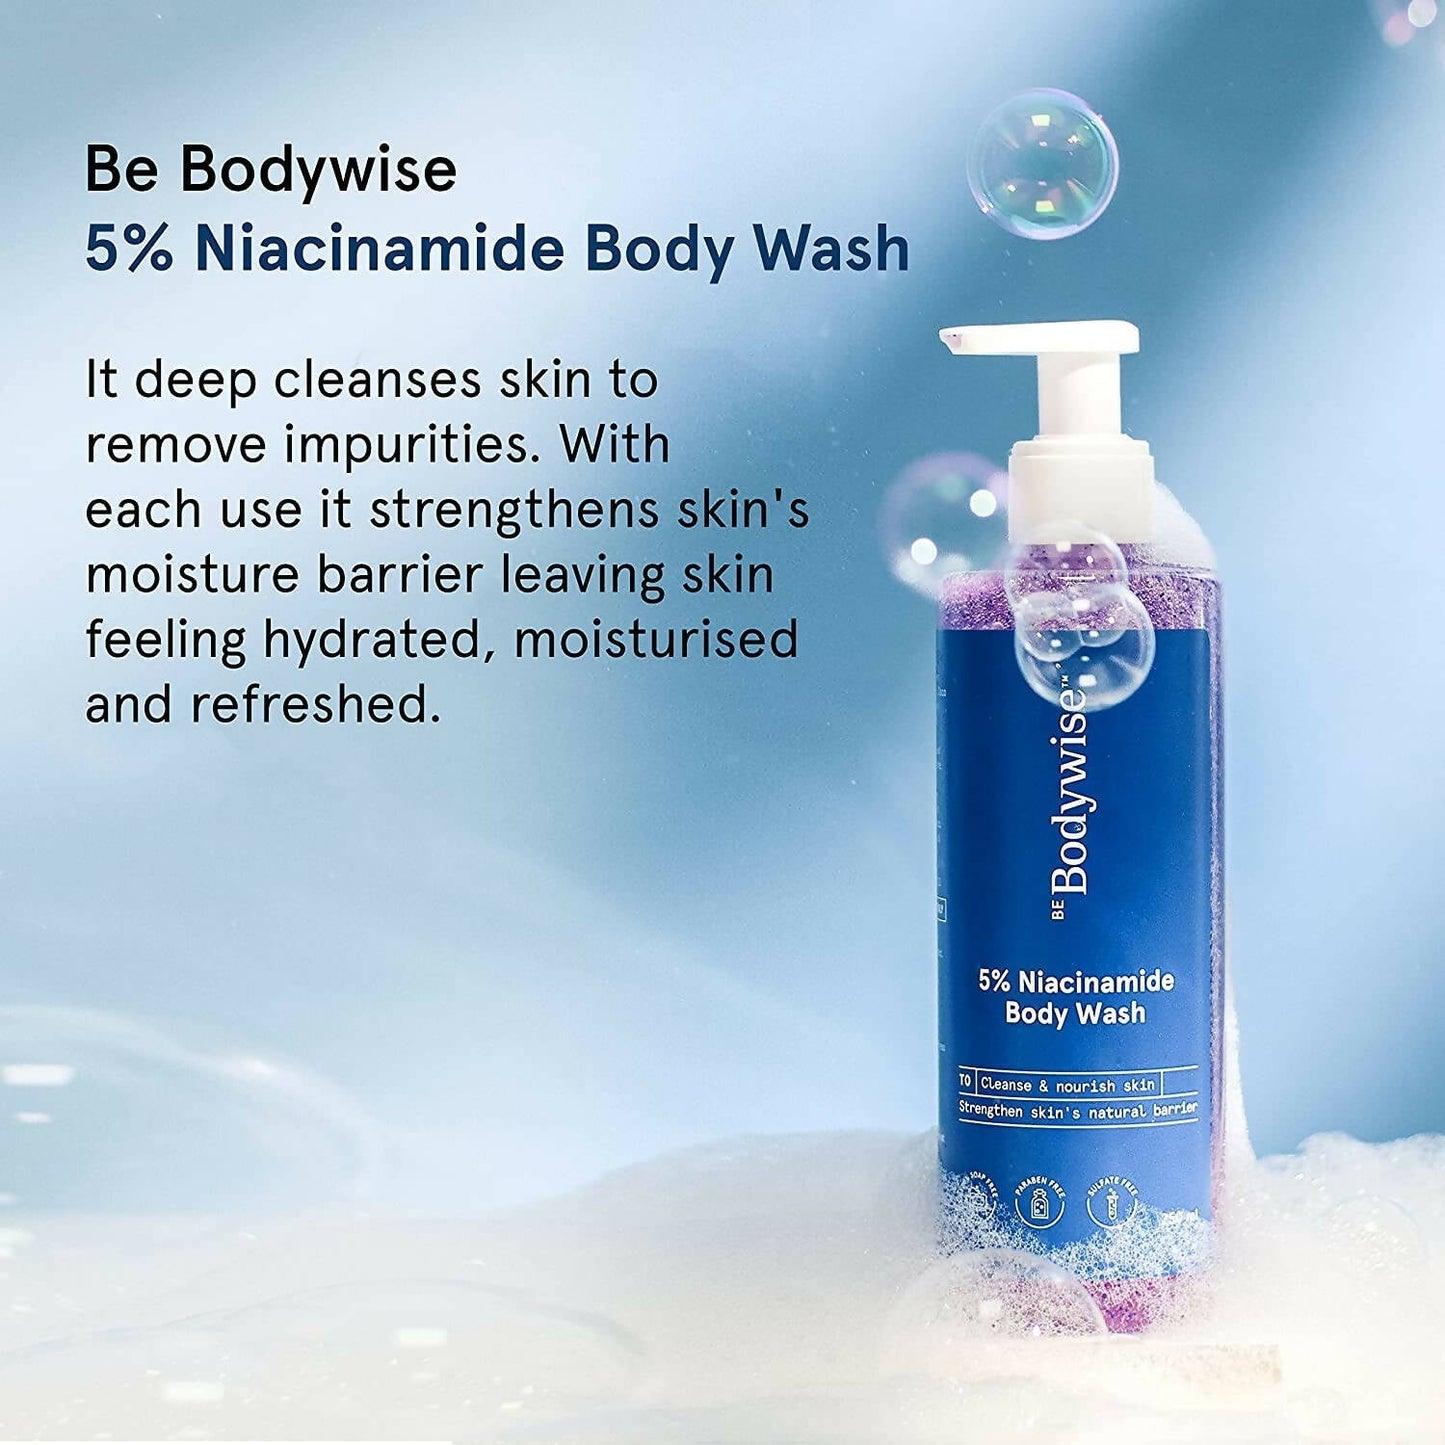 BeBodywise 5% Niacinamide Body Wash